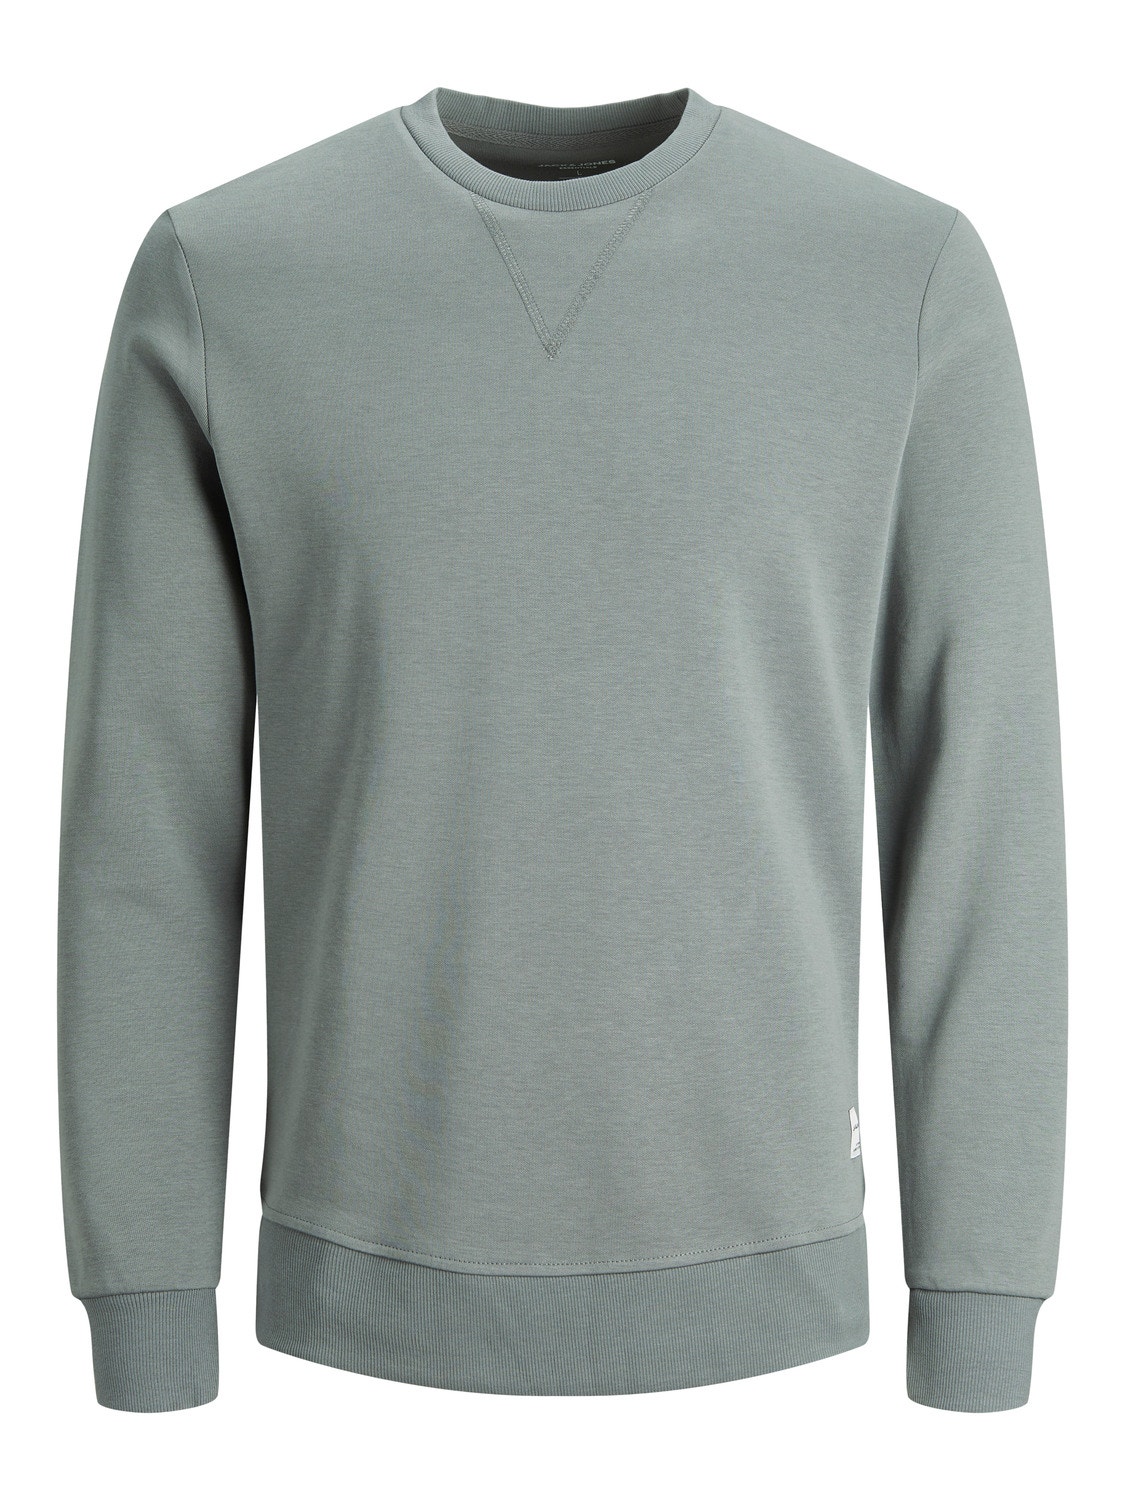 Jack & Jones Ensfarvet Sweatshirt med rund hals -Sedona Sage - 12181903